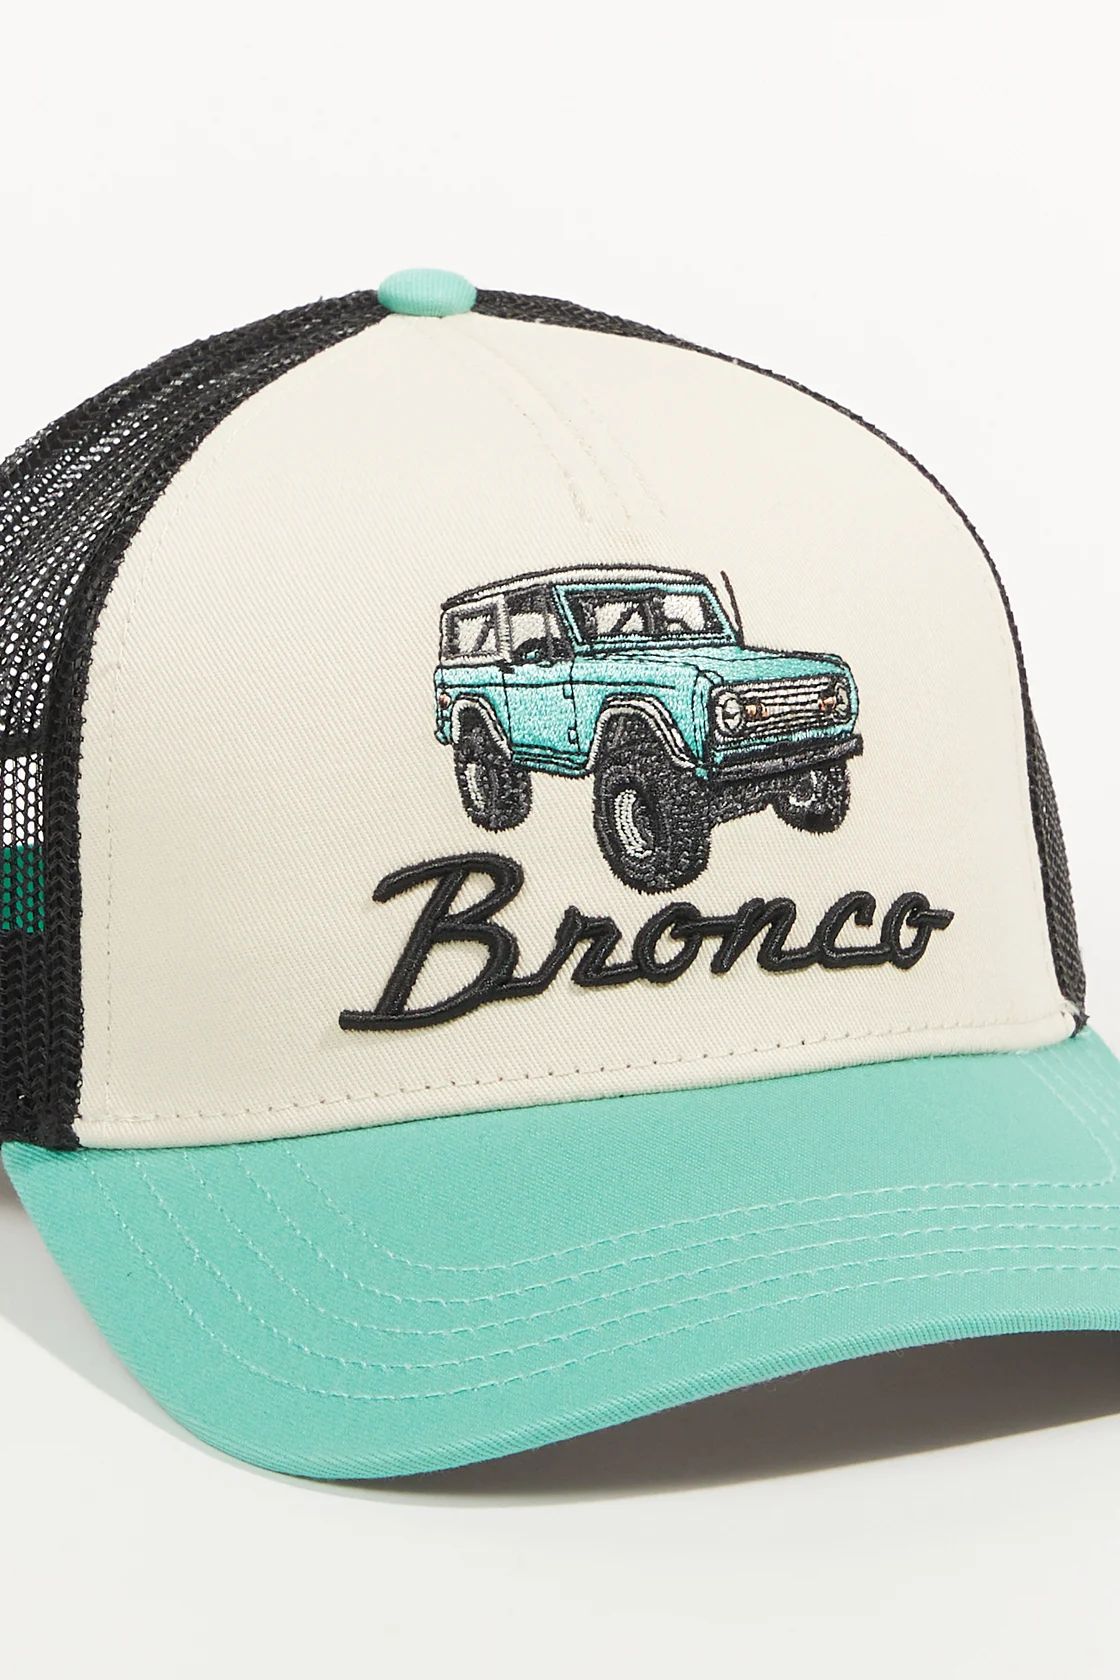 Bronco Trucker Hat in Blue & Navy | Altar'd State | Altar'd State